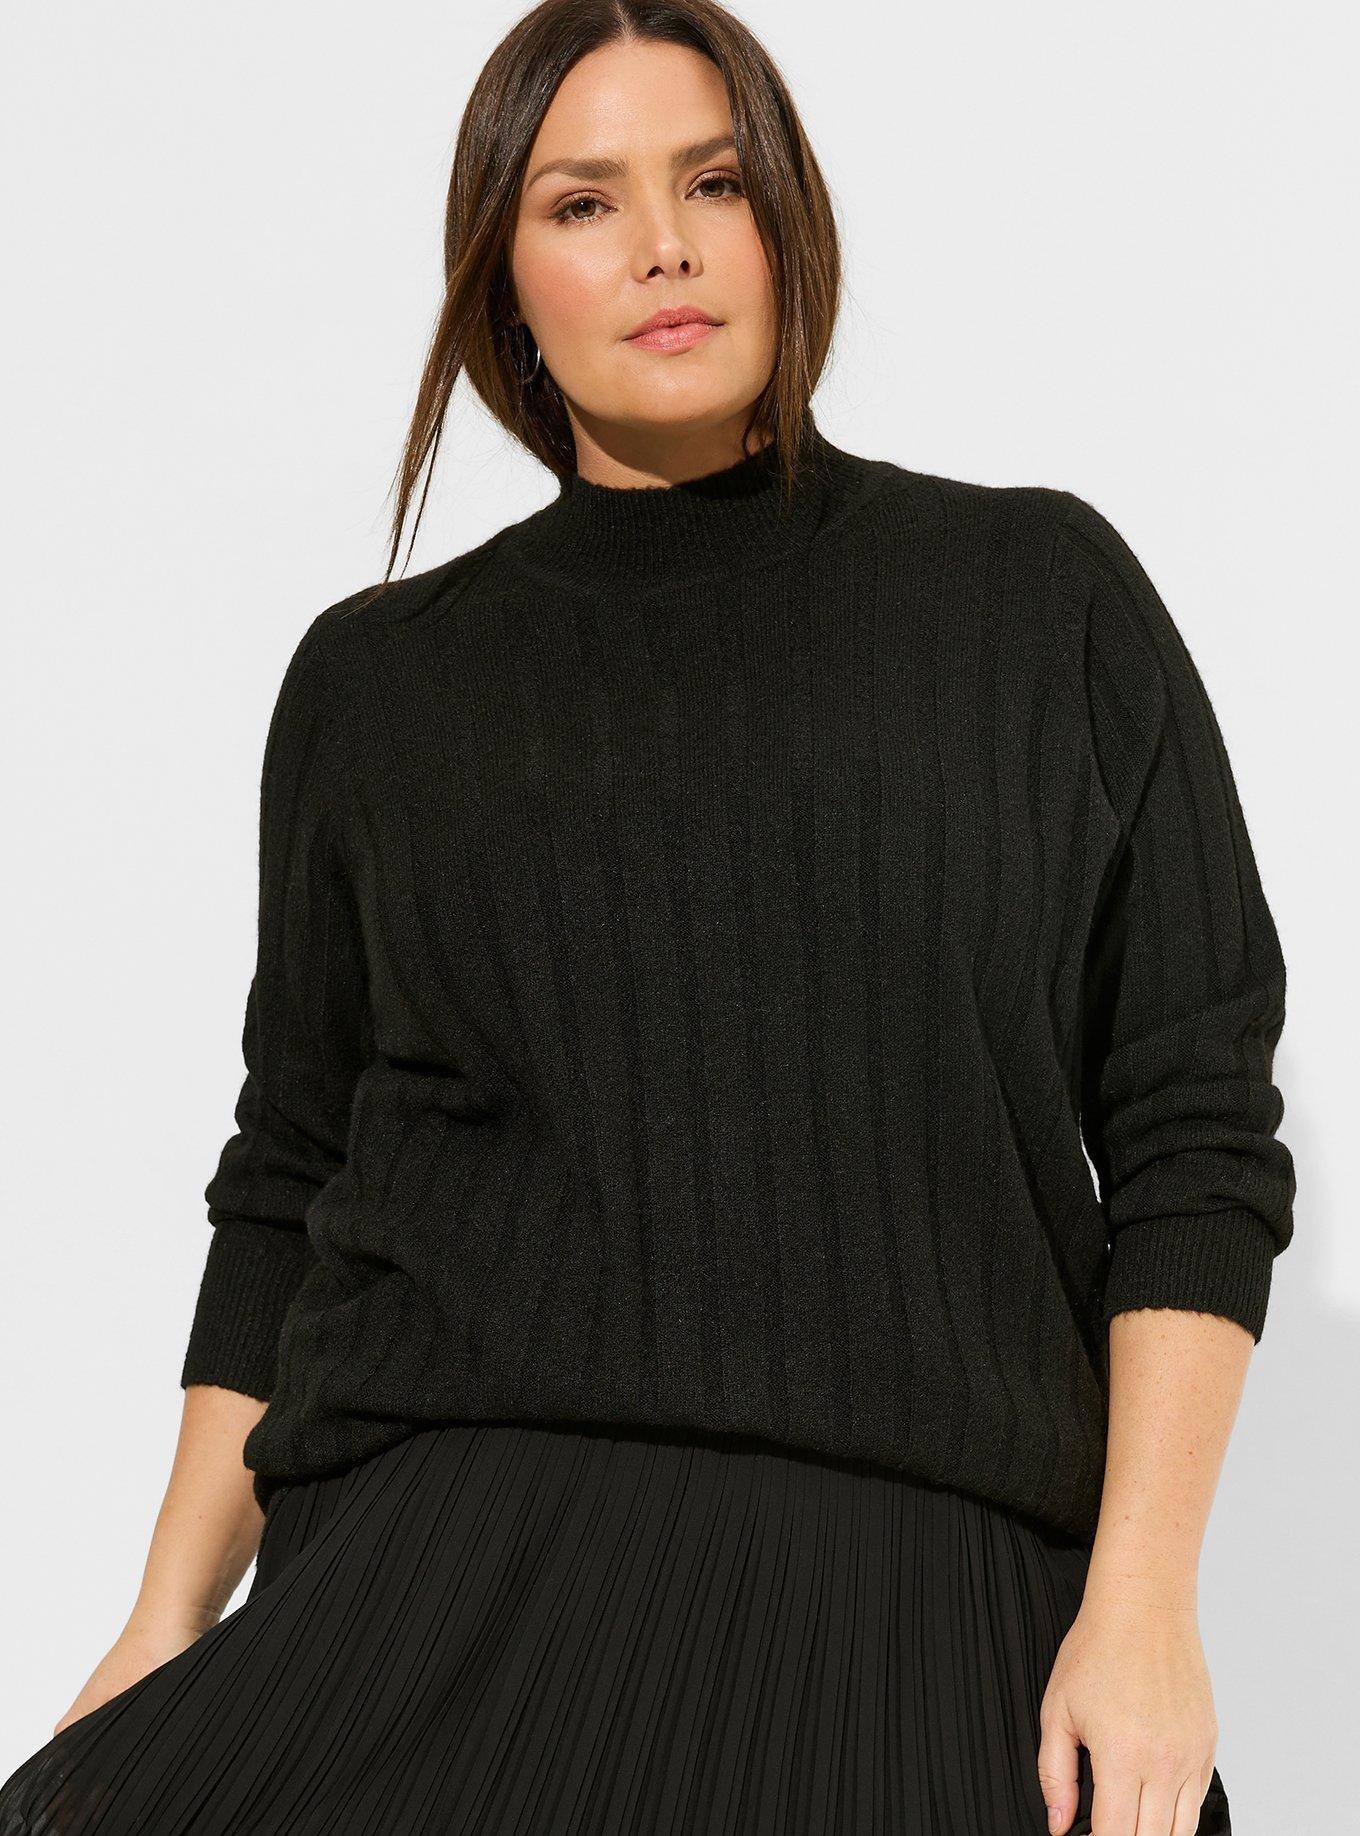 Plus Size - Vegan Cashmere Turtleneck Tunic Sweater - Torrid